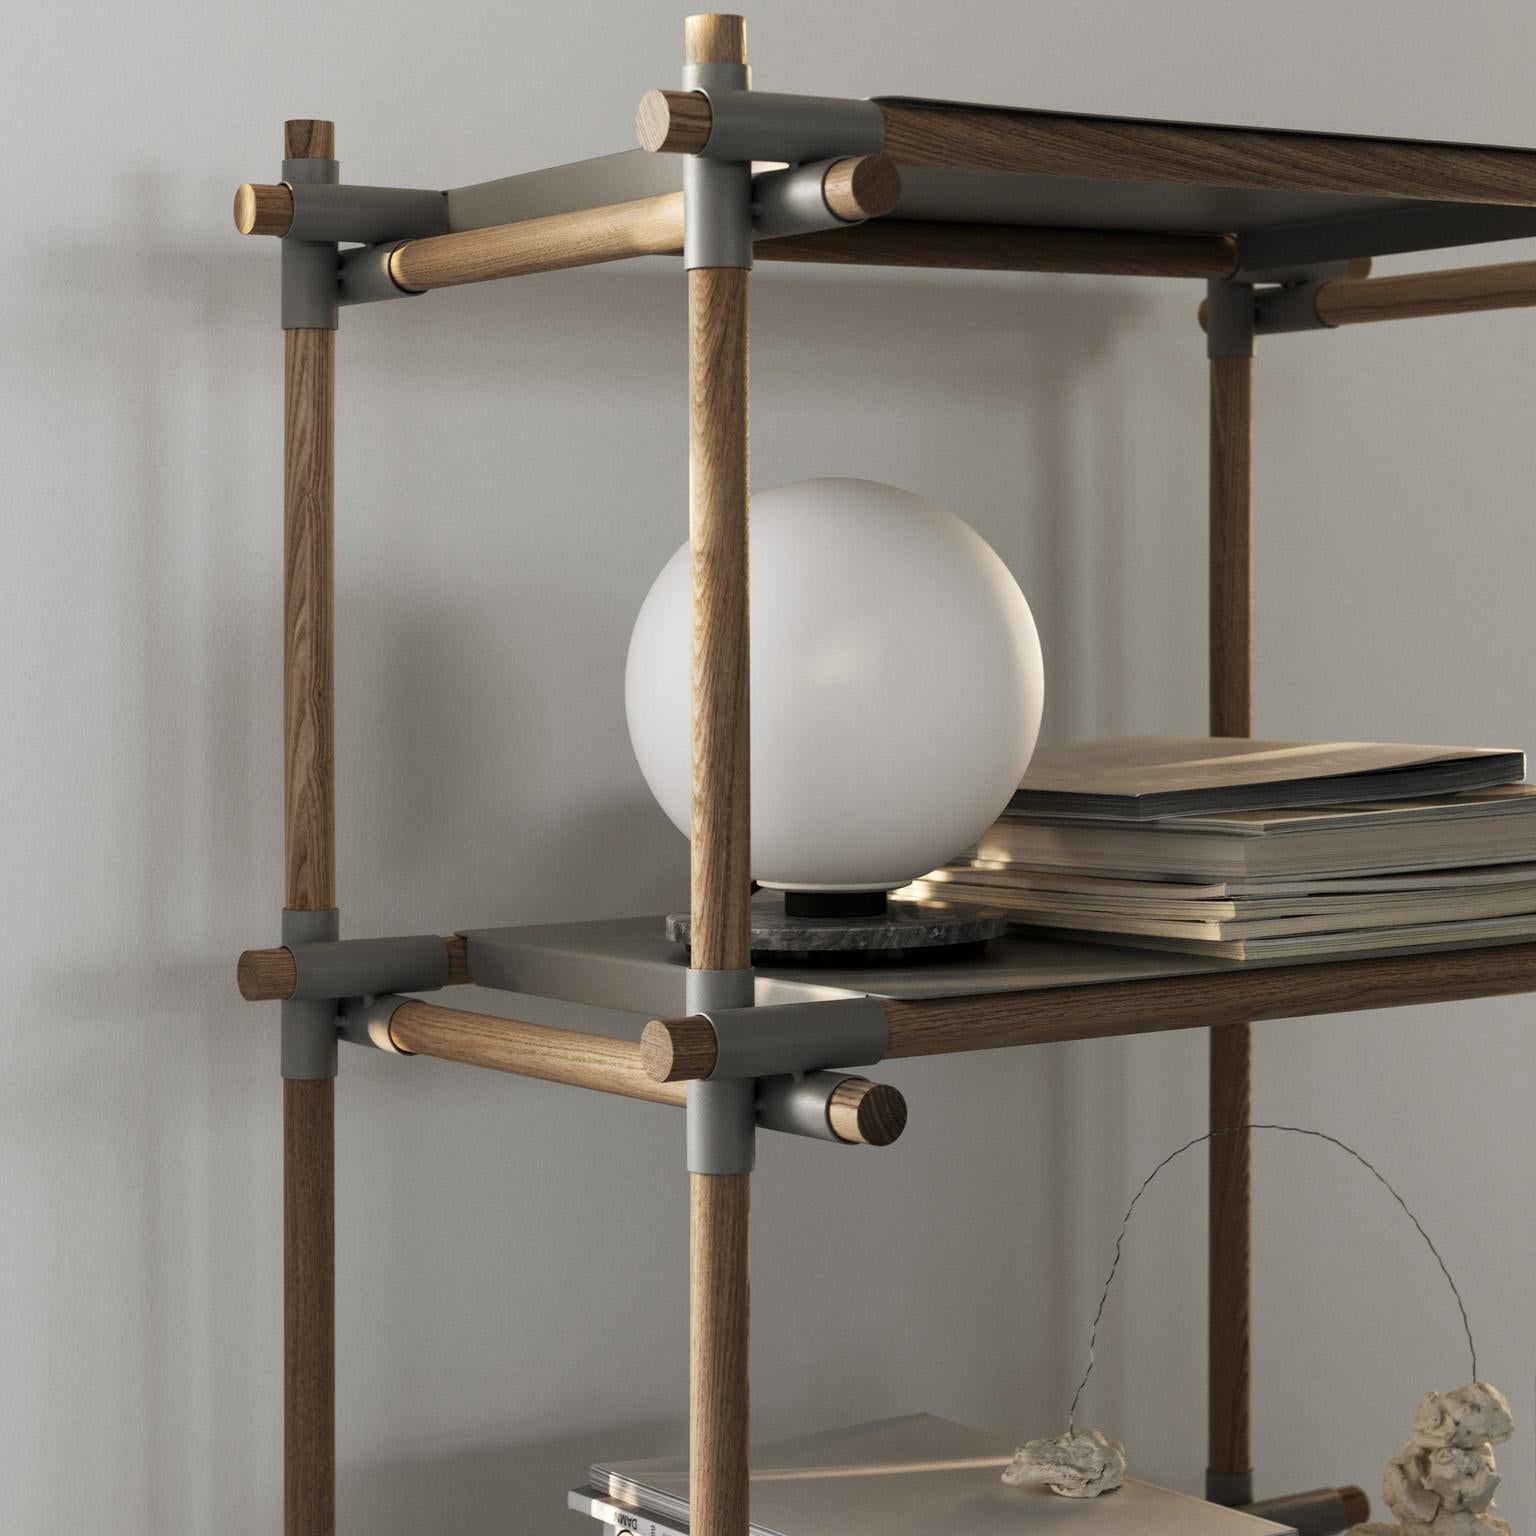 Scandinavian Modern Stick System, Light Grey Ash Shelves with Light Grey Poles, 1 x 3 For Sale